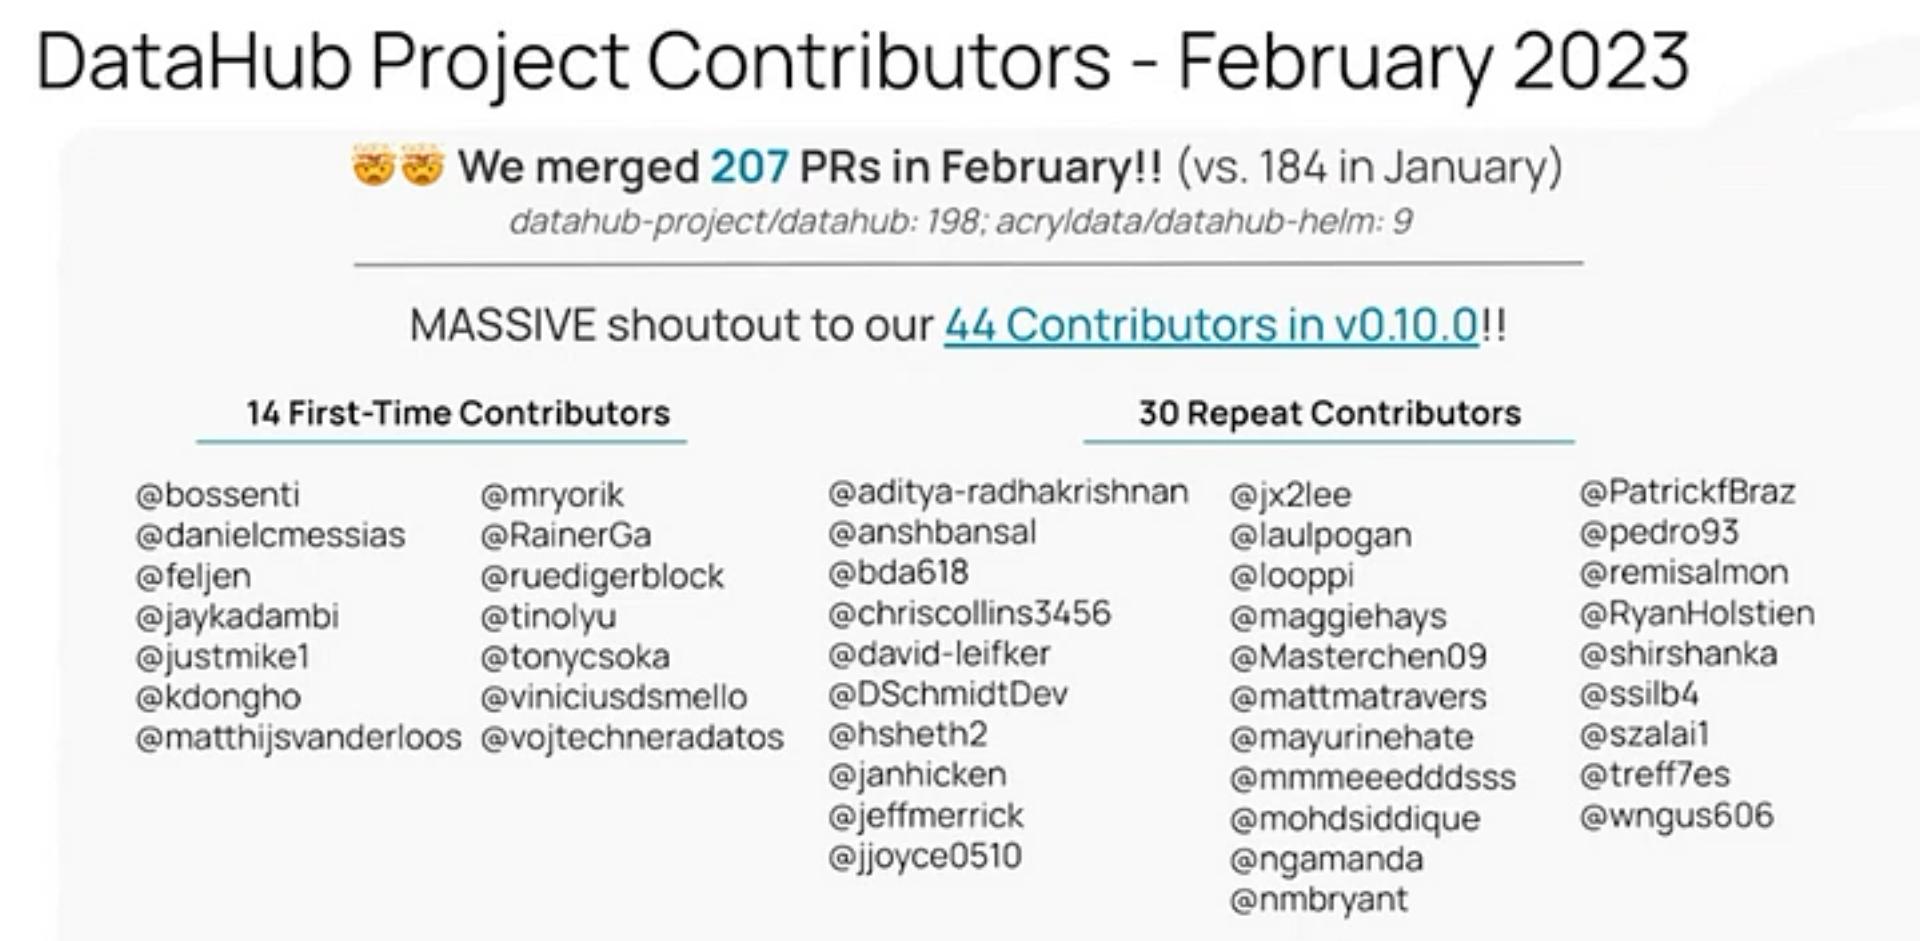 Datahub Project Contributors - February 2023